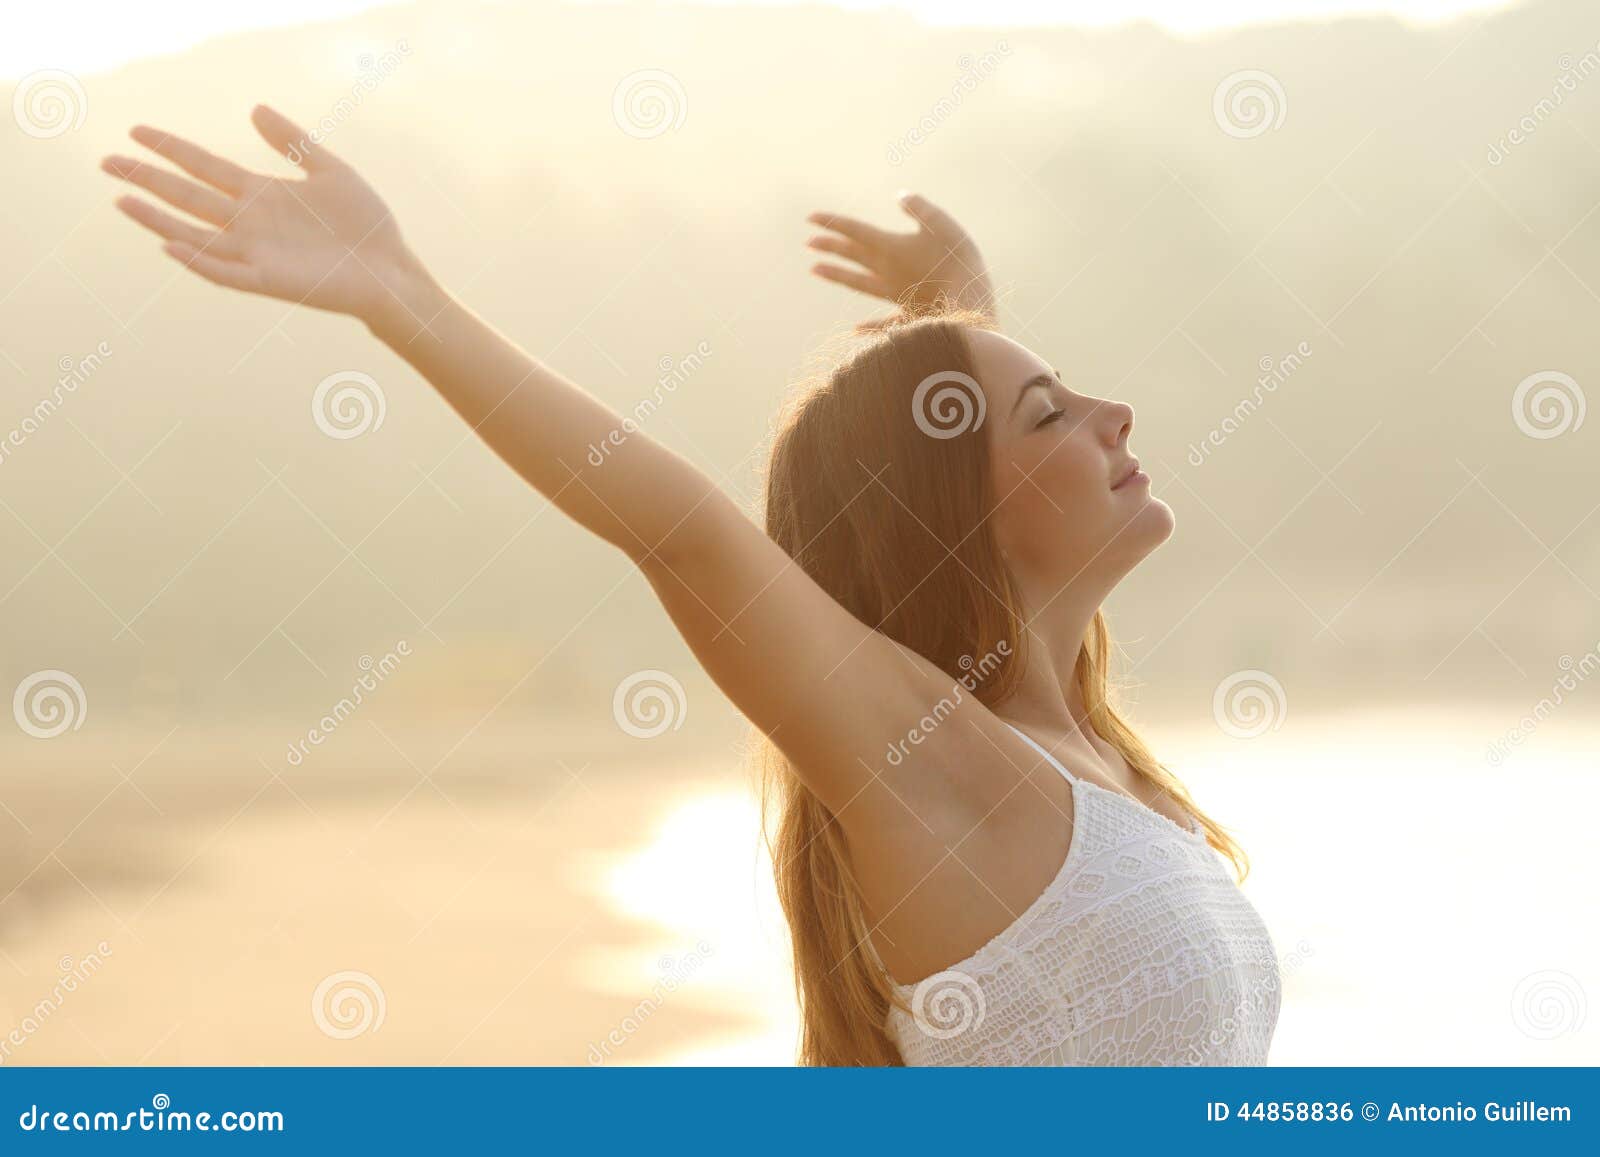 relaxed woman breathing fresh air raising arms at sunrise